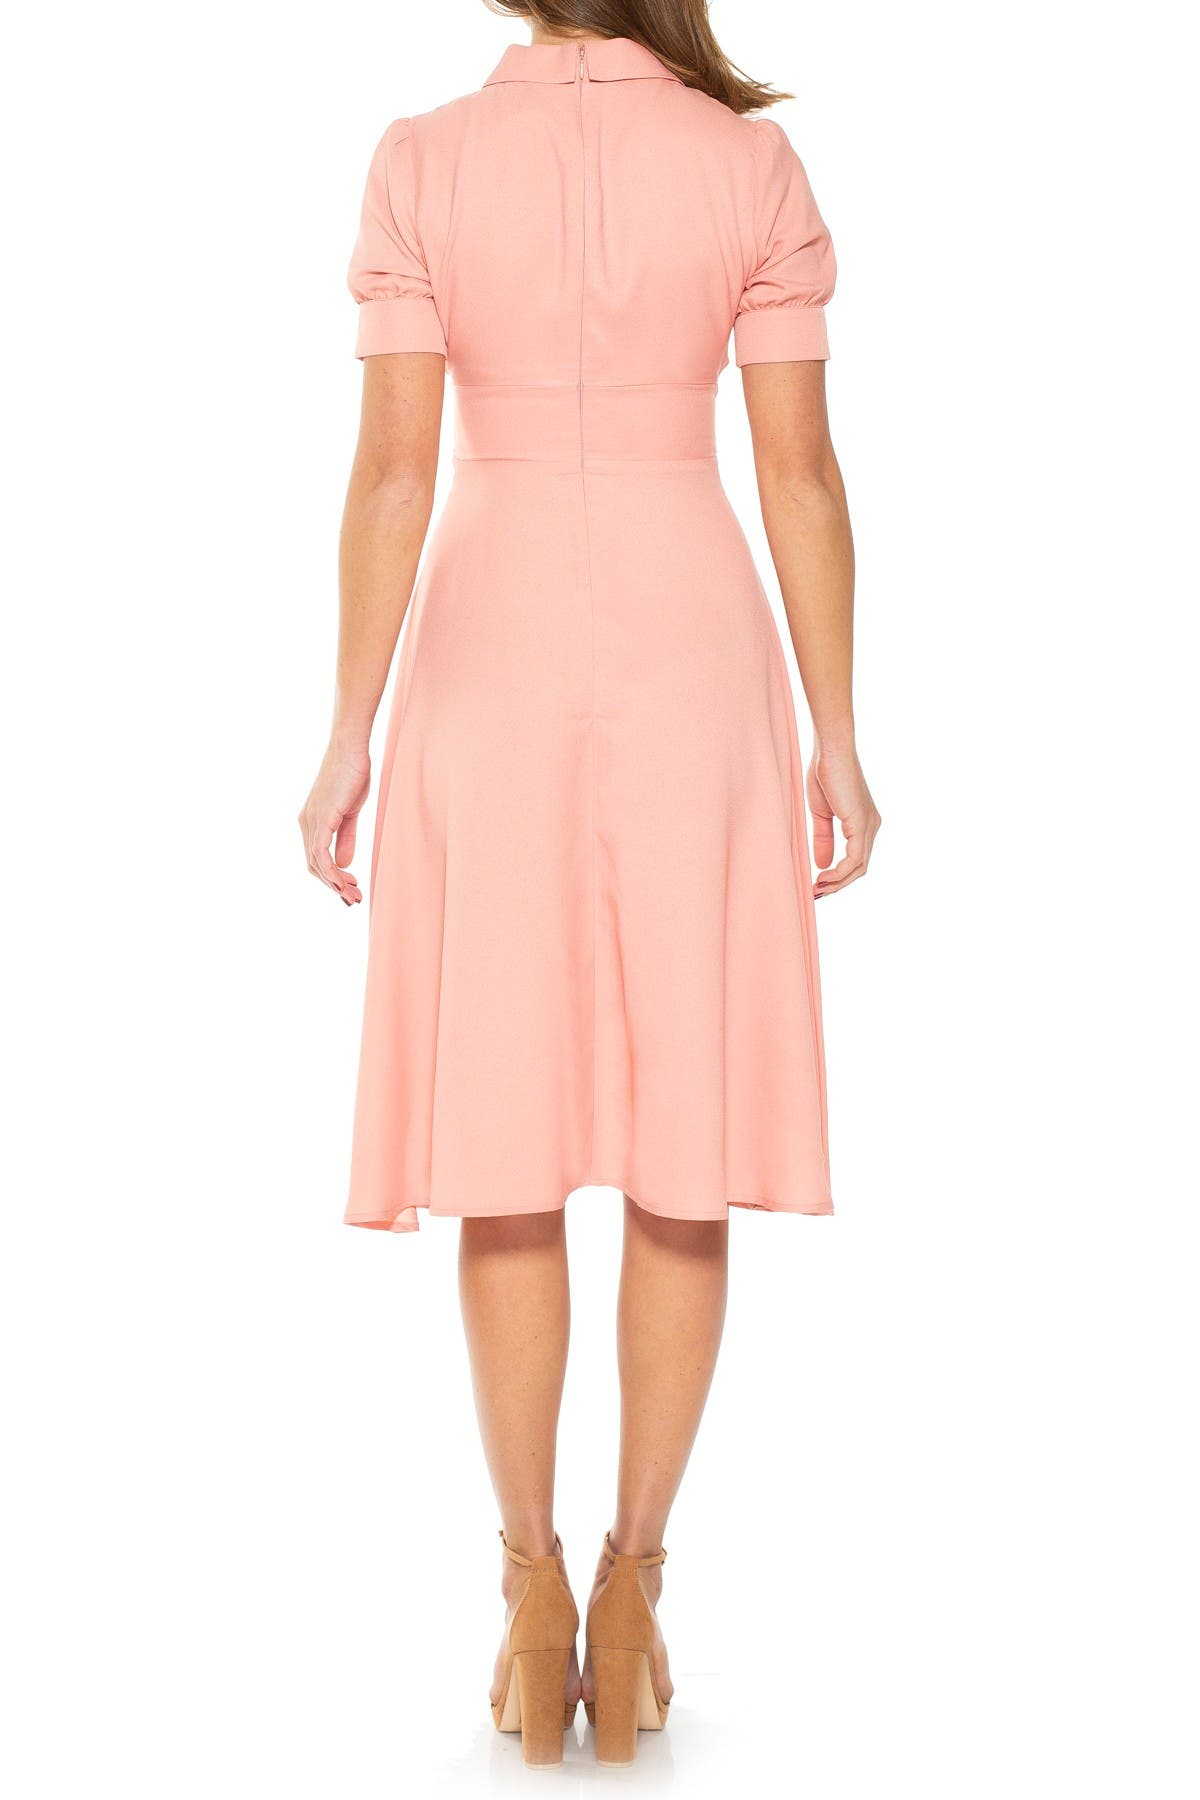 Alexia Admor Printed Spread Collar Midi Dress In Medium Pink6